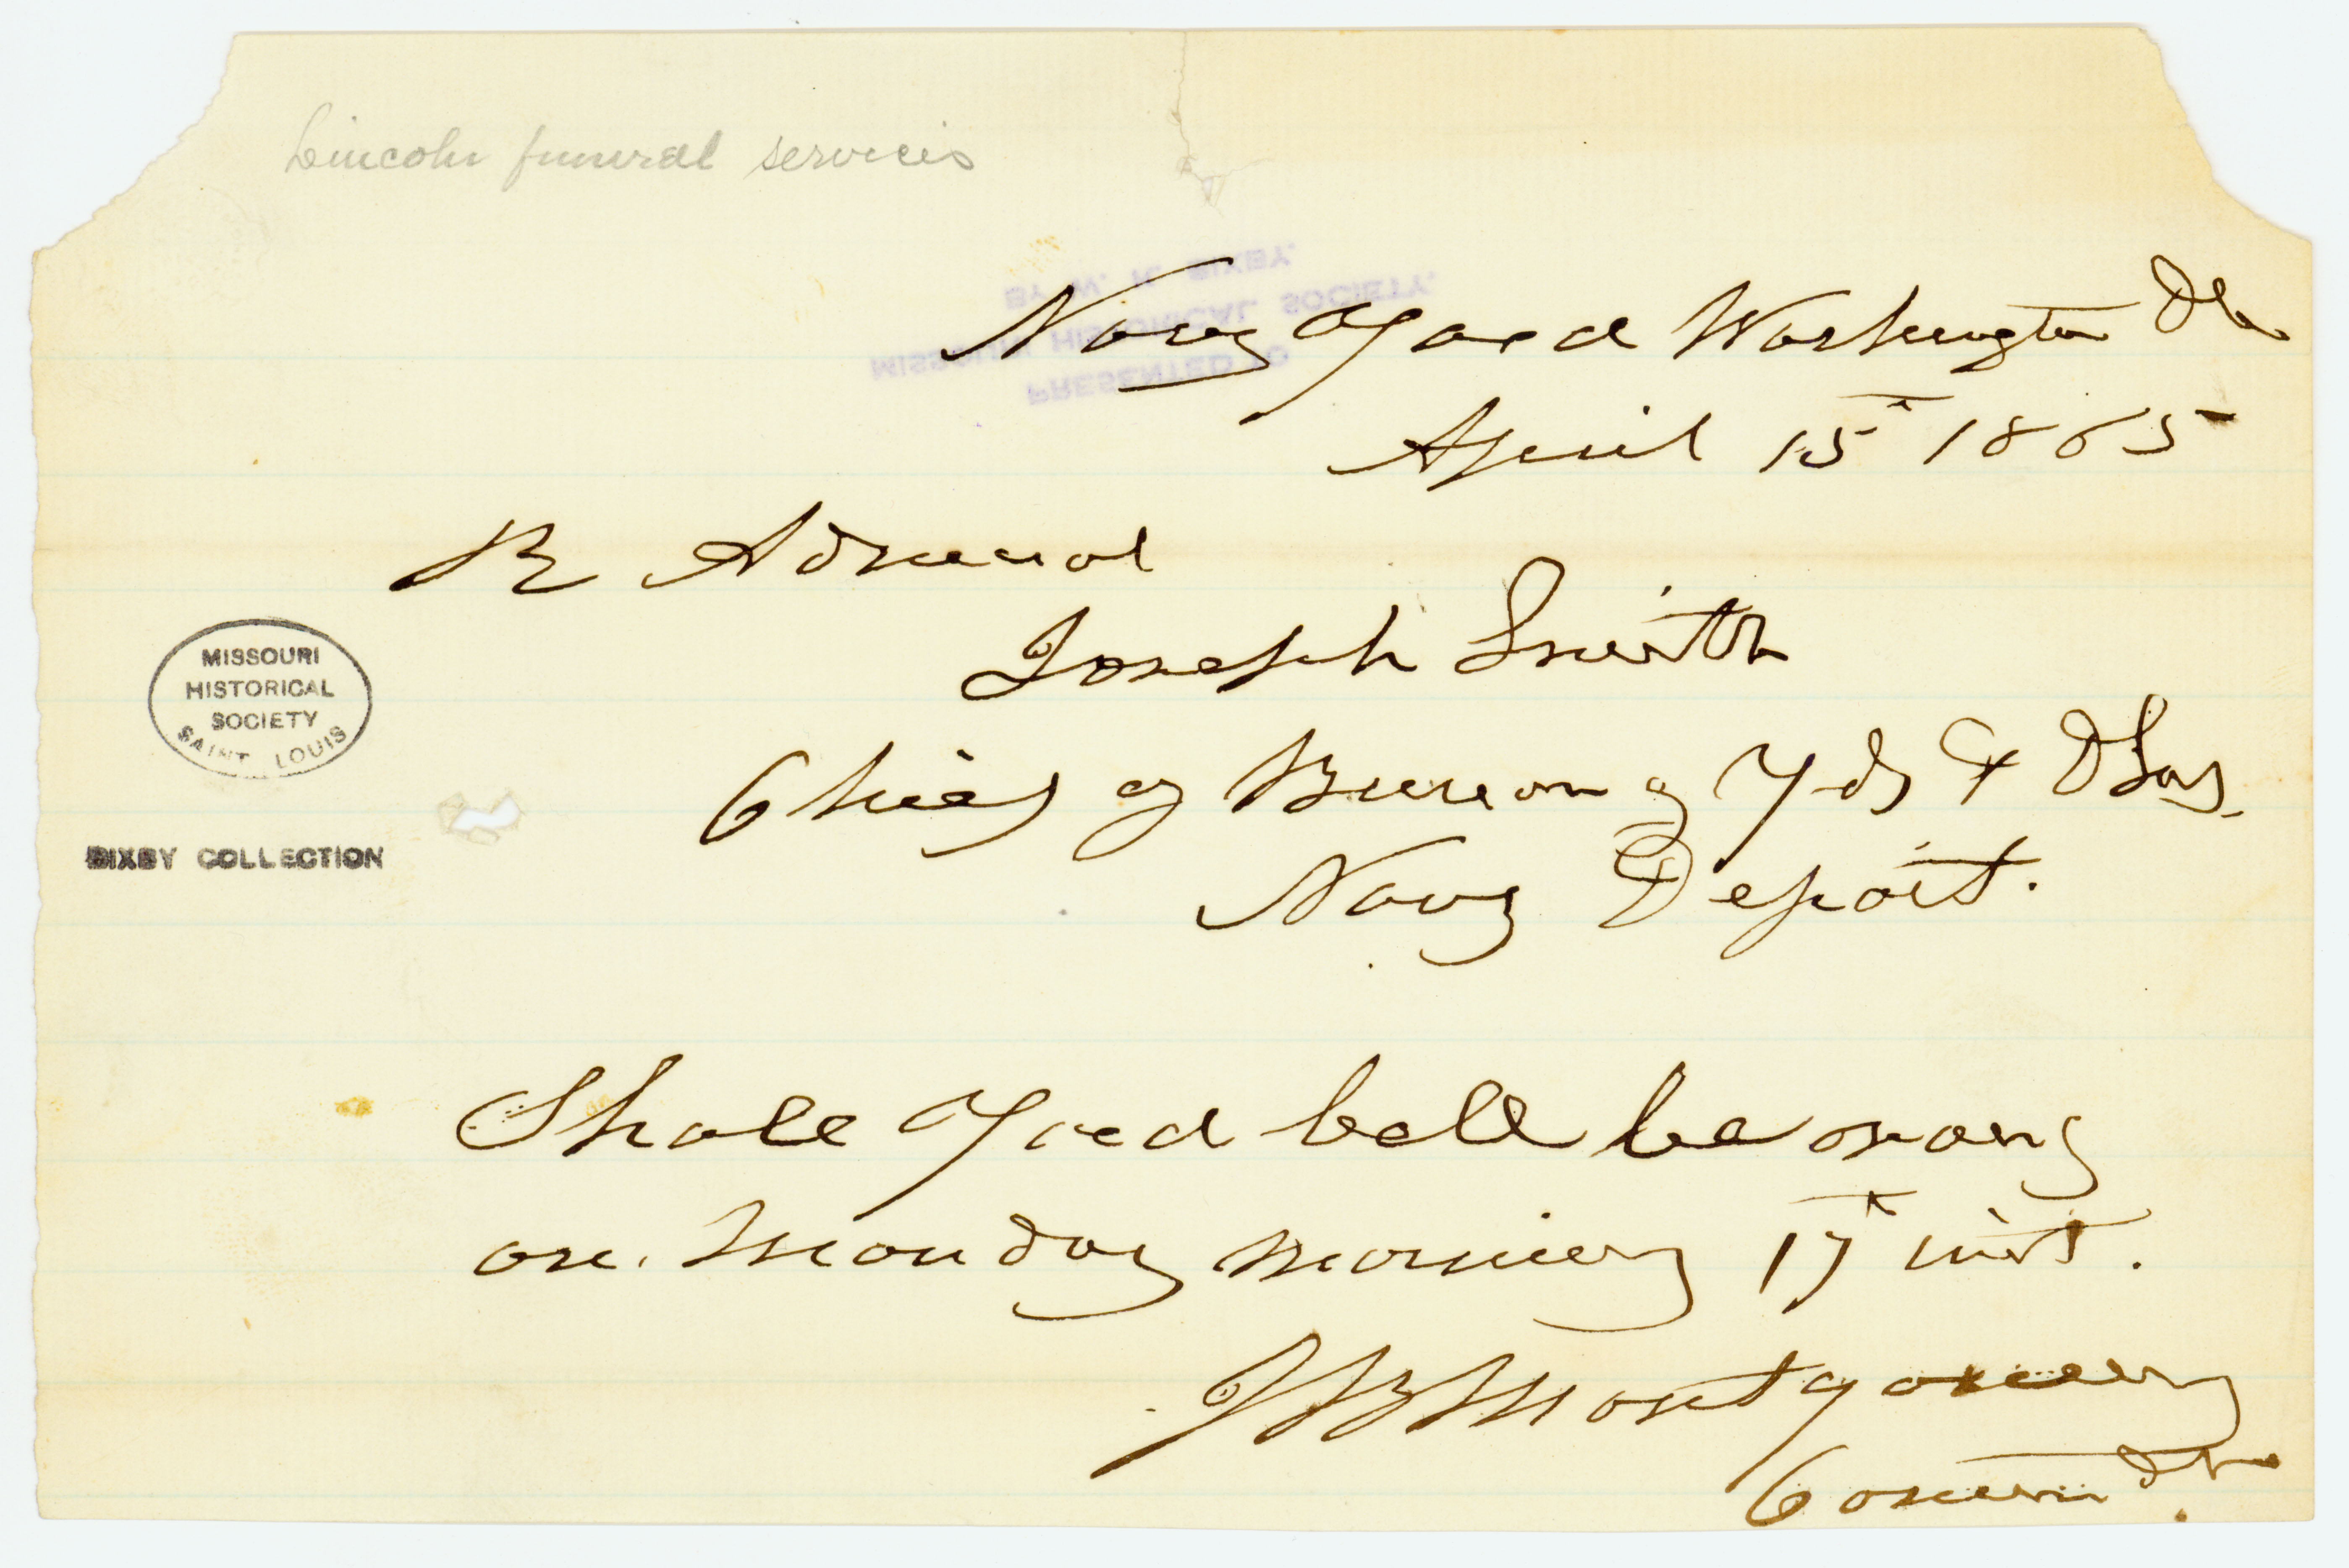 Contemporary copy of telegram of J. B. Montgomery, Navy Yard, Washington, D.C., to Joseph Smith, Rear Admiral, Chief of Bureau Yards, Navy Department, April 15, 1865